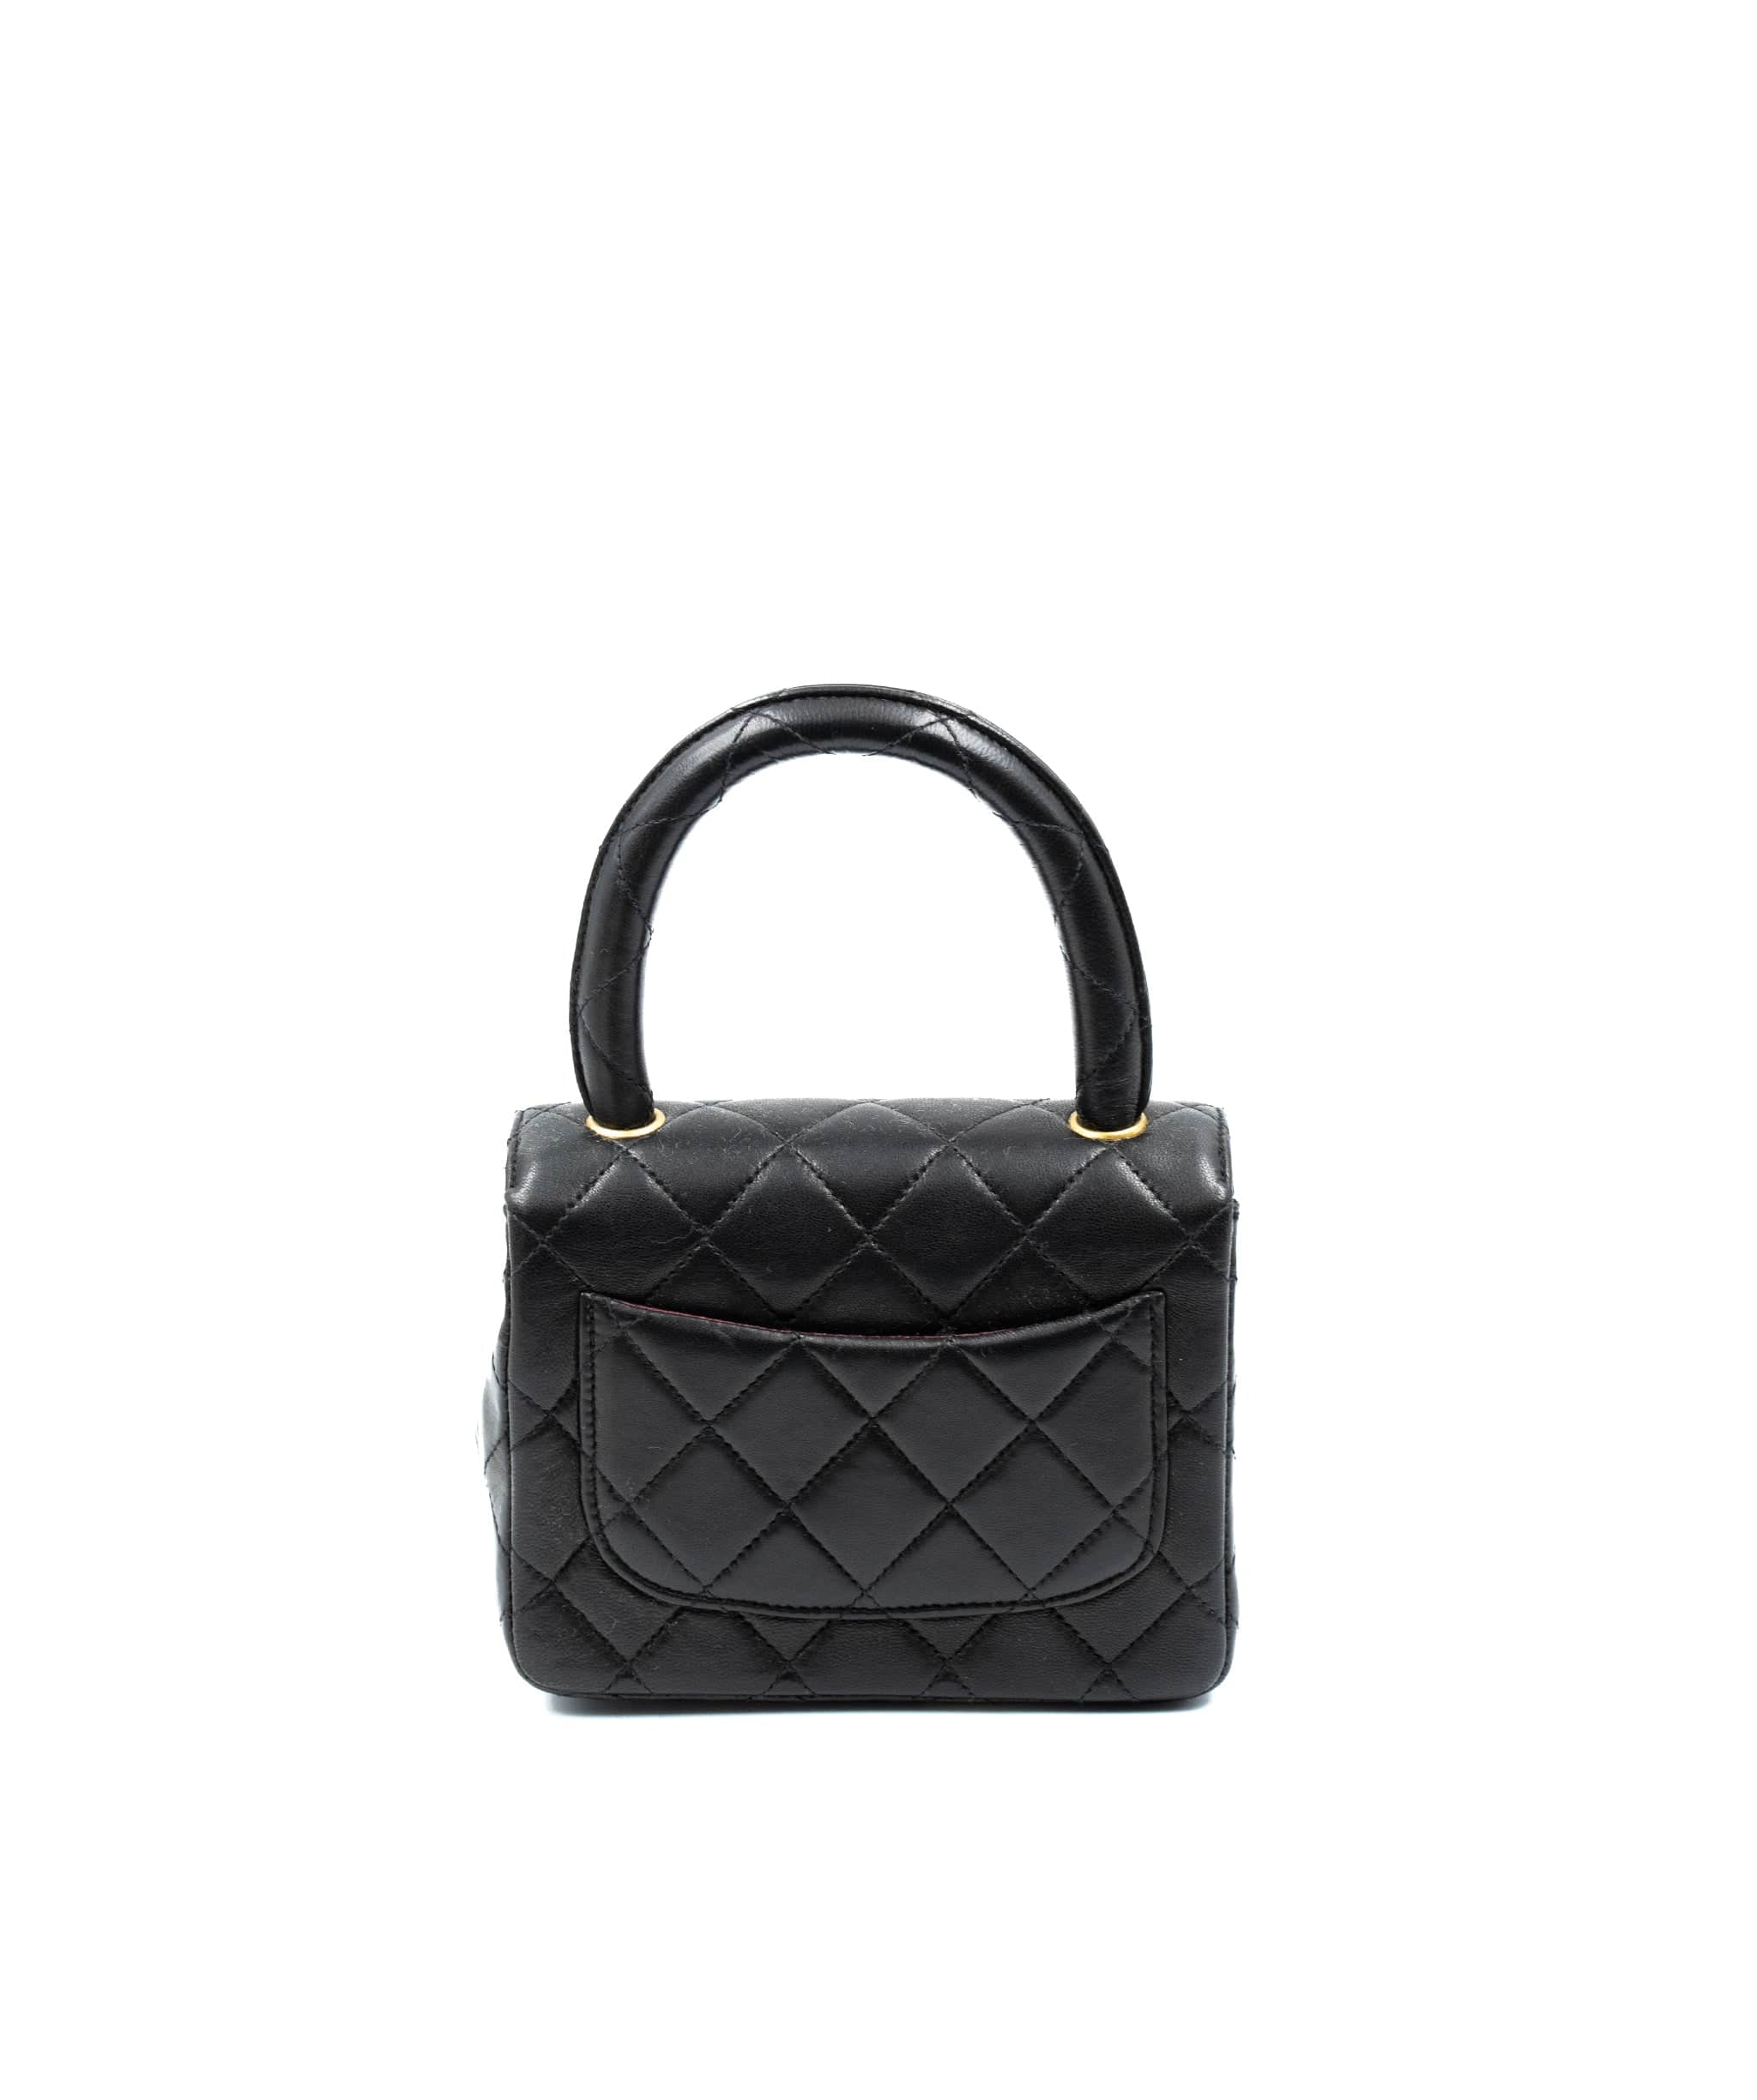 Chanel Chanel Mini Top Handle Kelly bag - AWL3439